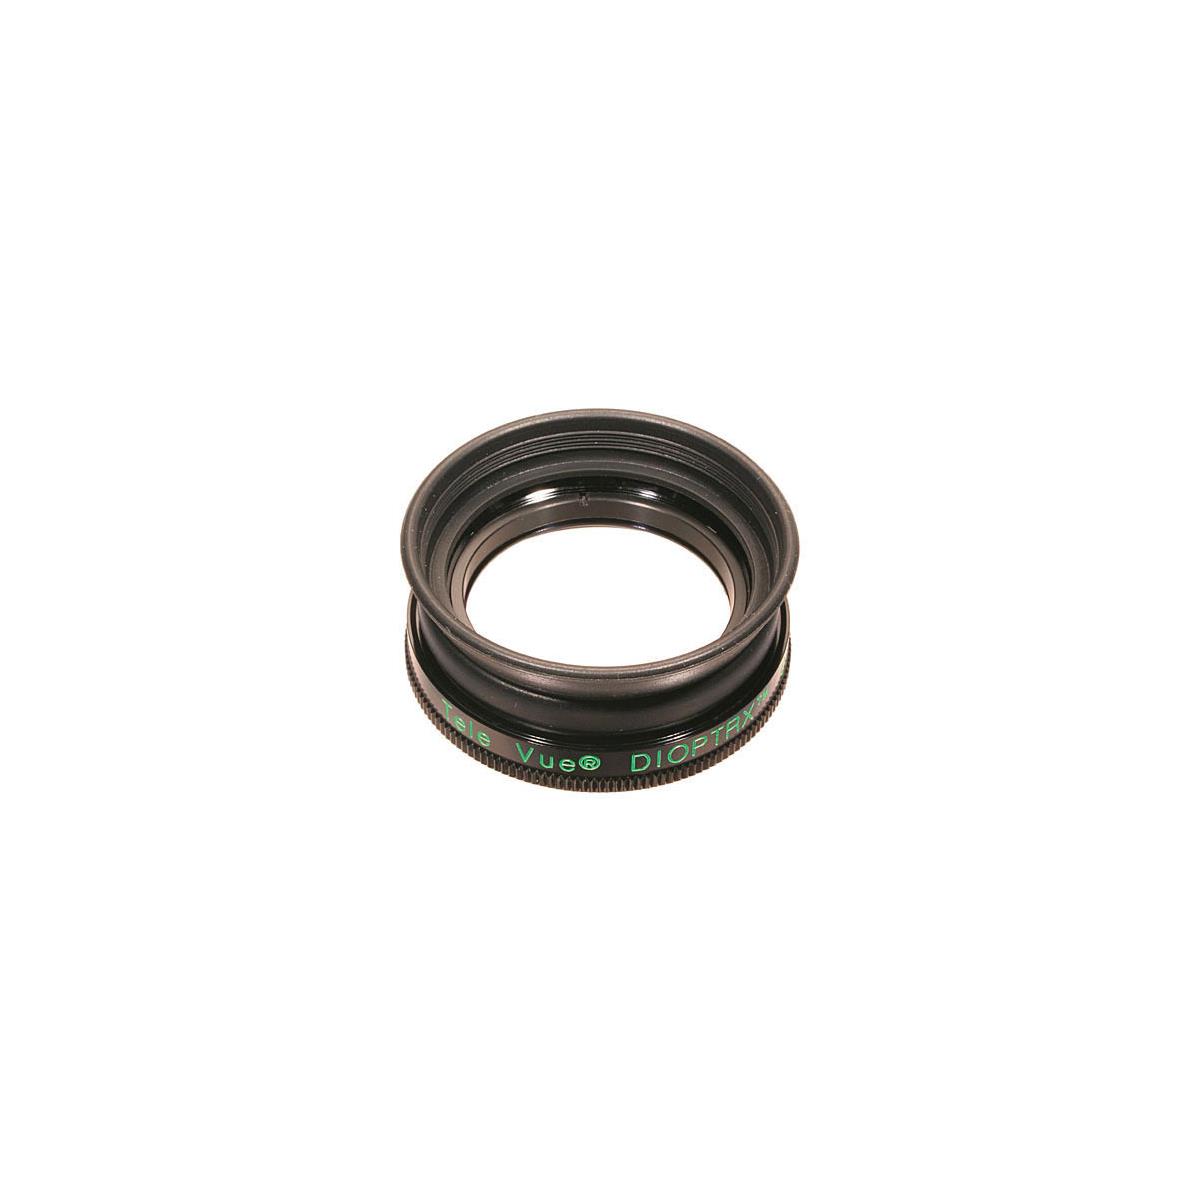 Image of Tele Vue Dioptrx Astigmatism Correcting Lens - 3.50